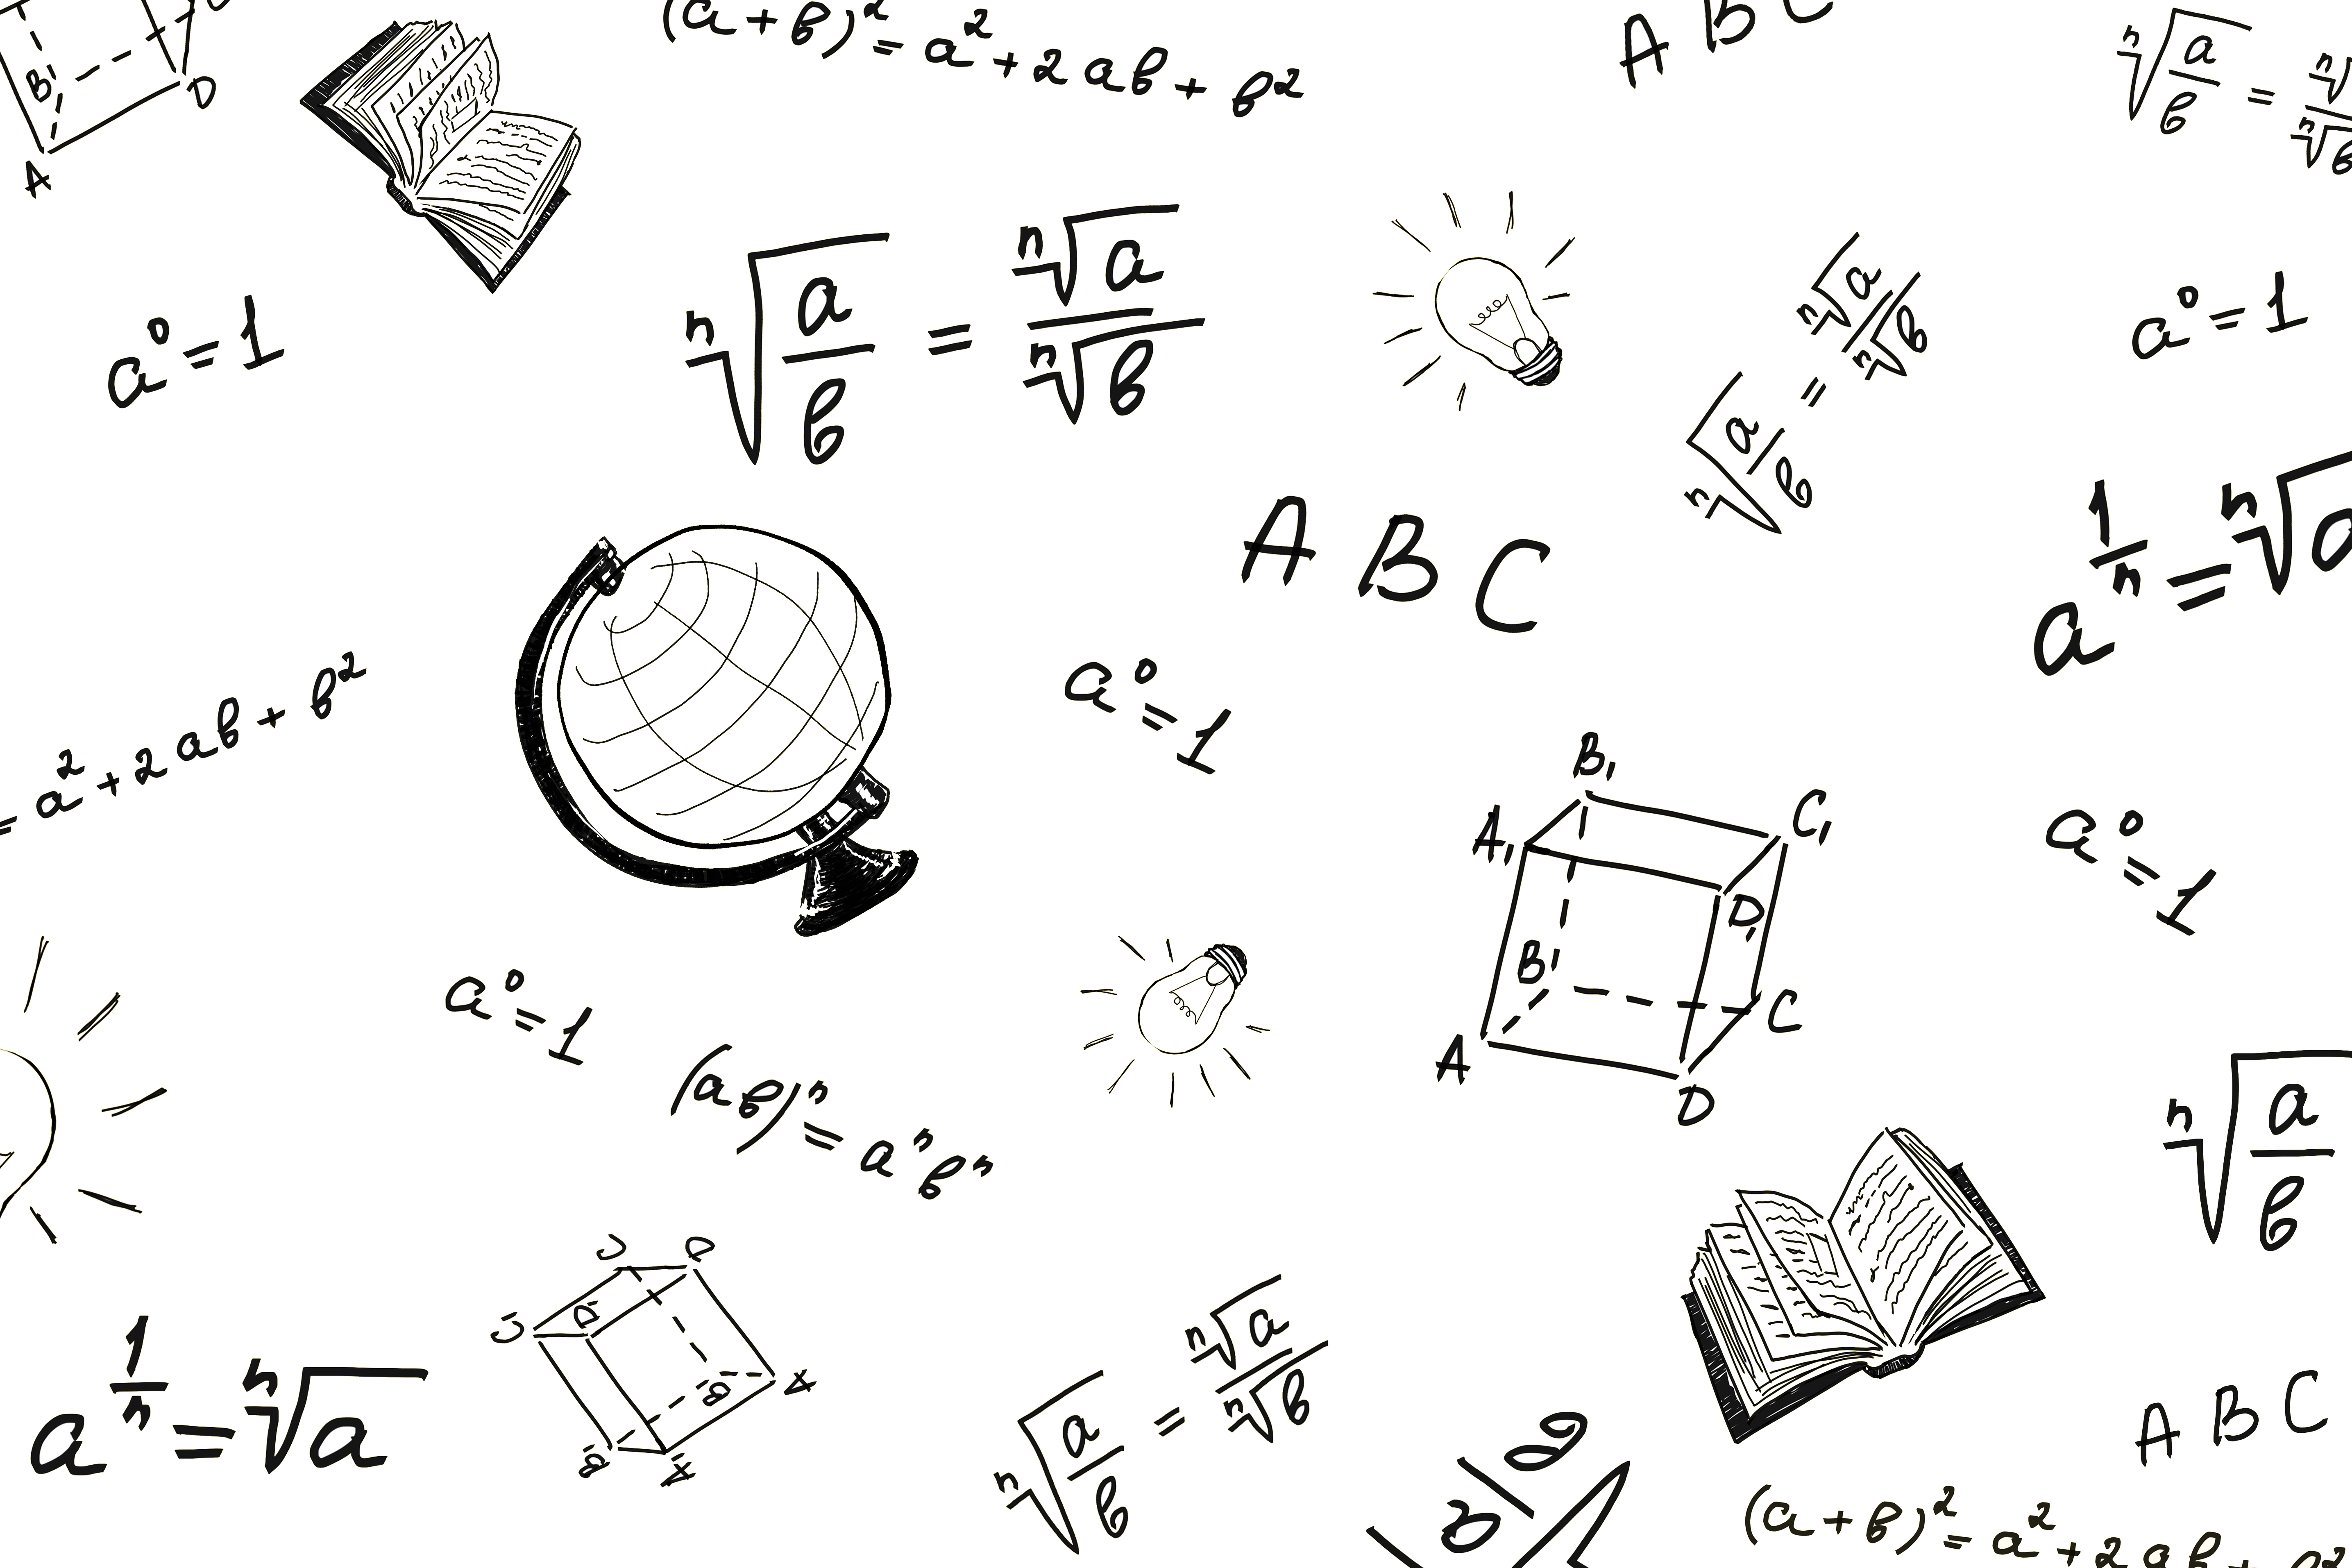 Cartoon page full of math formulas and diagrams